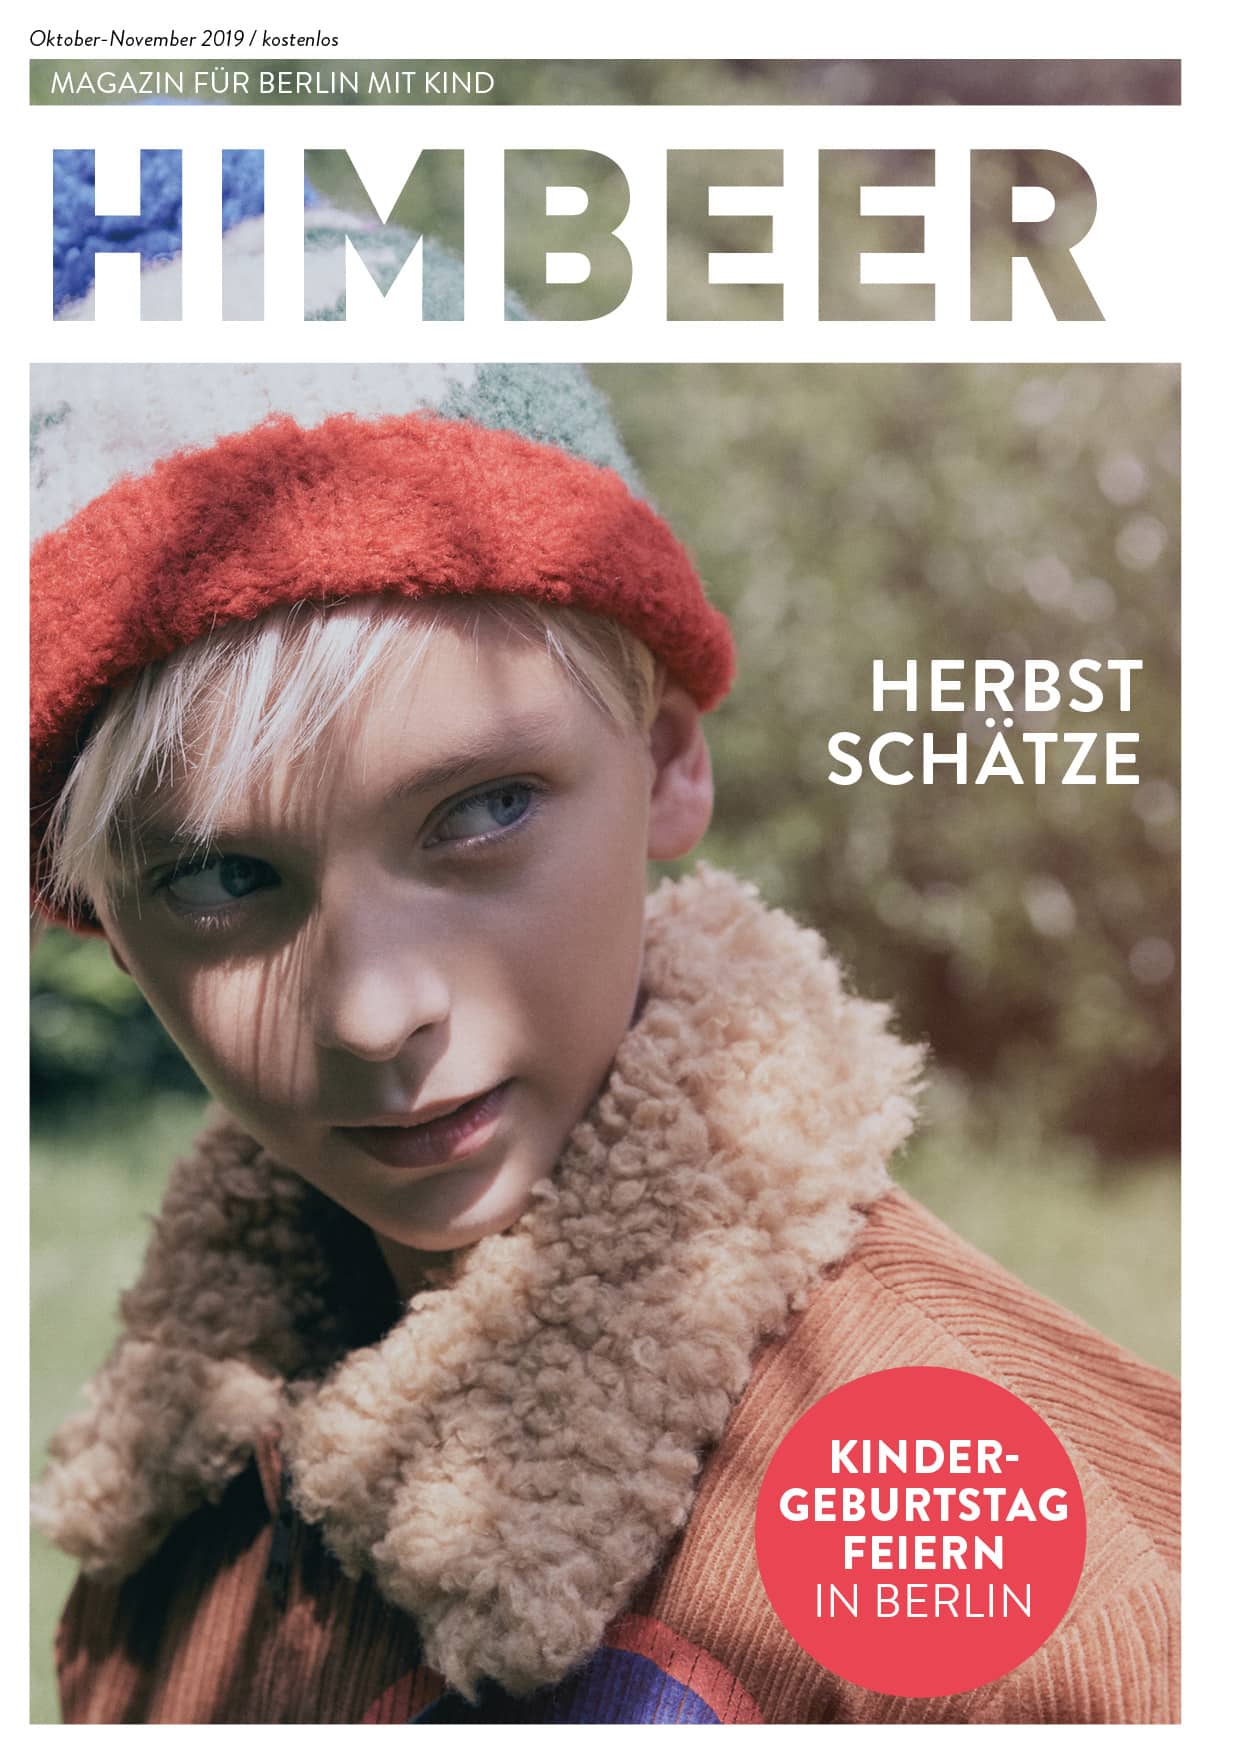 Himbeer Magazin Für Berlin Mit Kind Oktober-November 2019: Herbstschätze // Himbeer